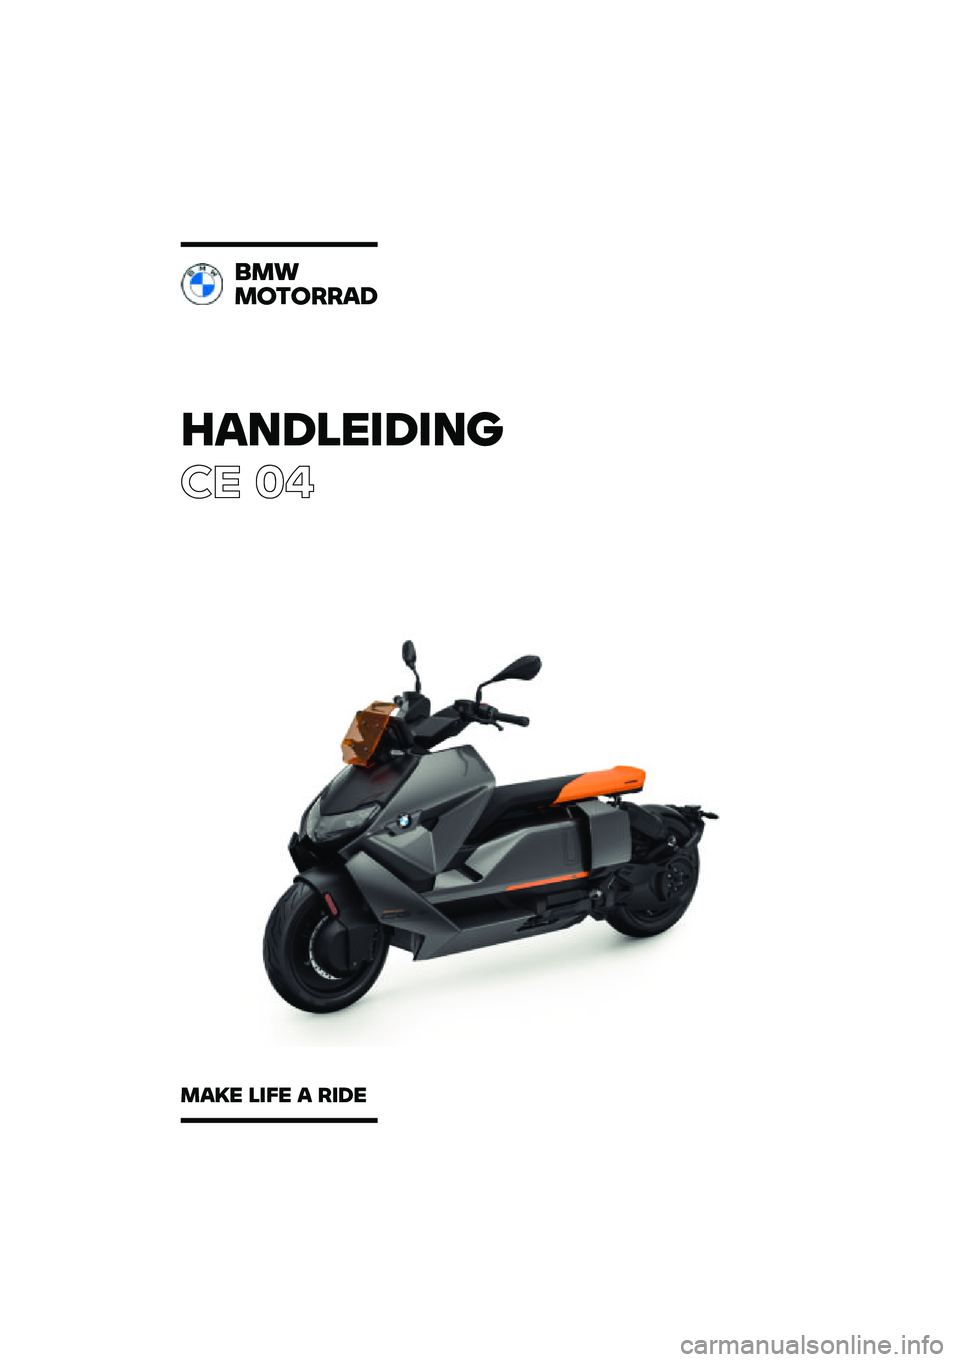 BMW MOTORRAD CE 04 2021  Handleiding (in Dutch) �������\b��\b��	
�� ��
�
��\f
��
��
����
���� ��\b�� � ��\b�� 